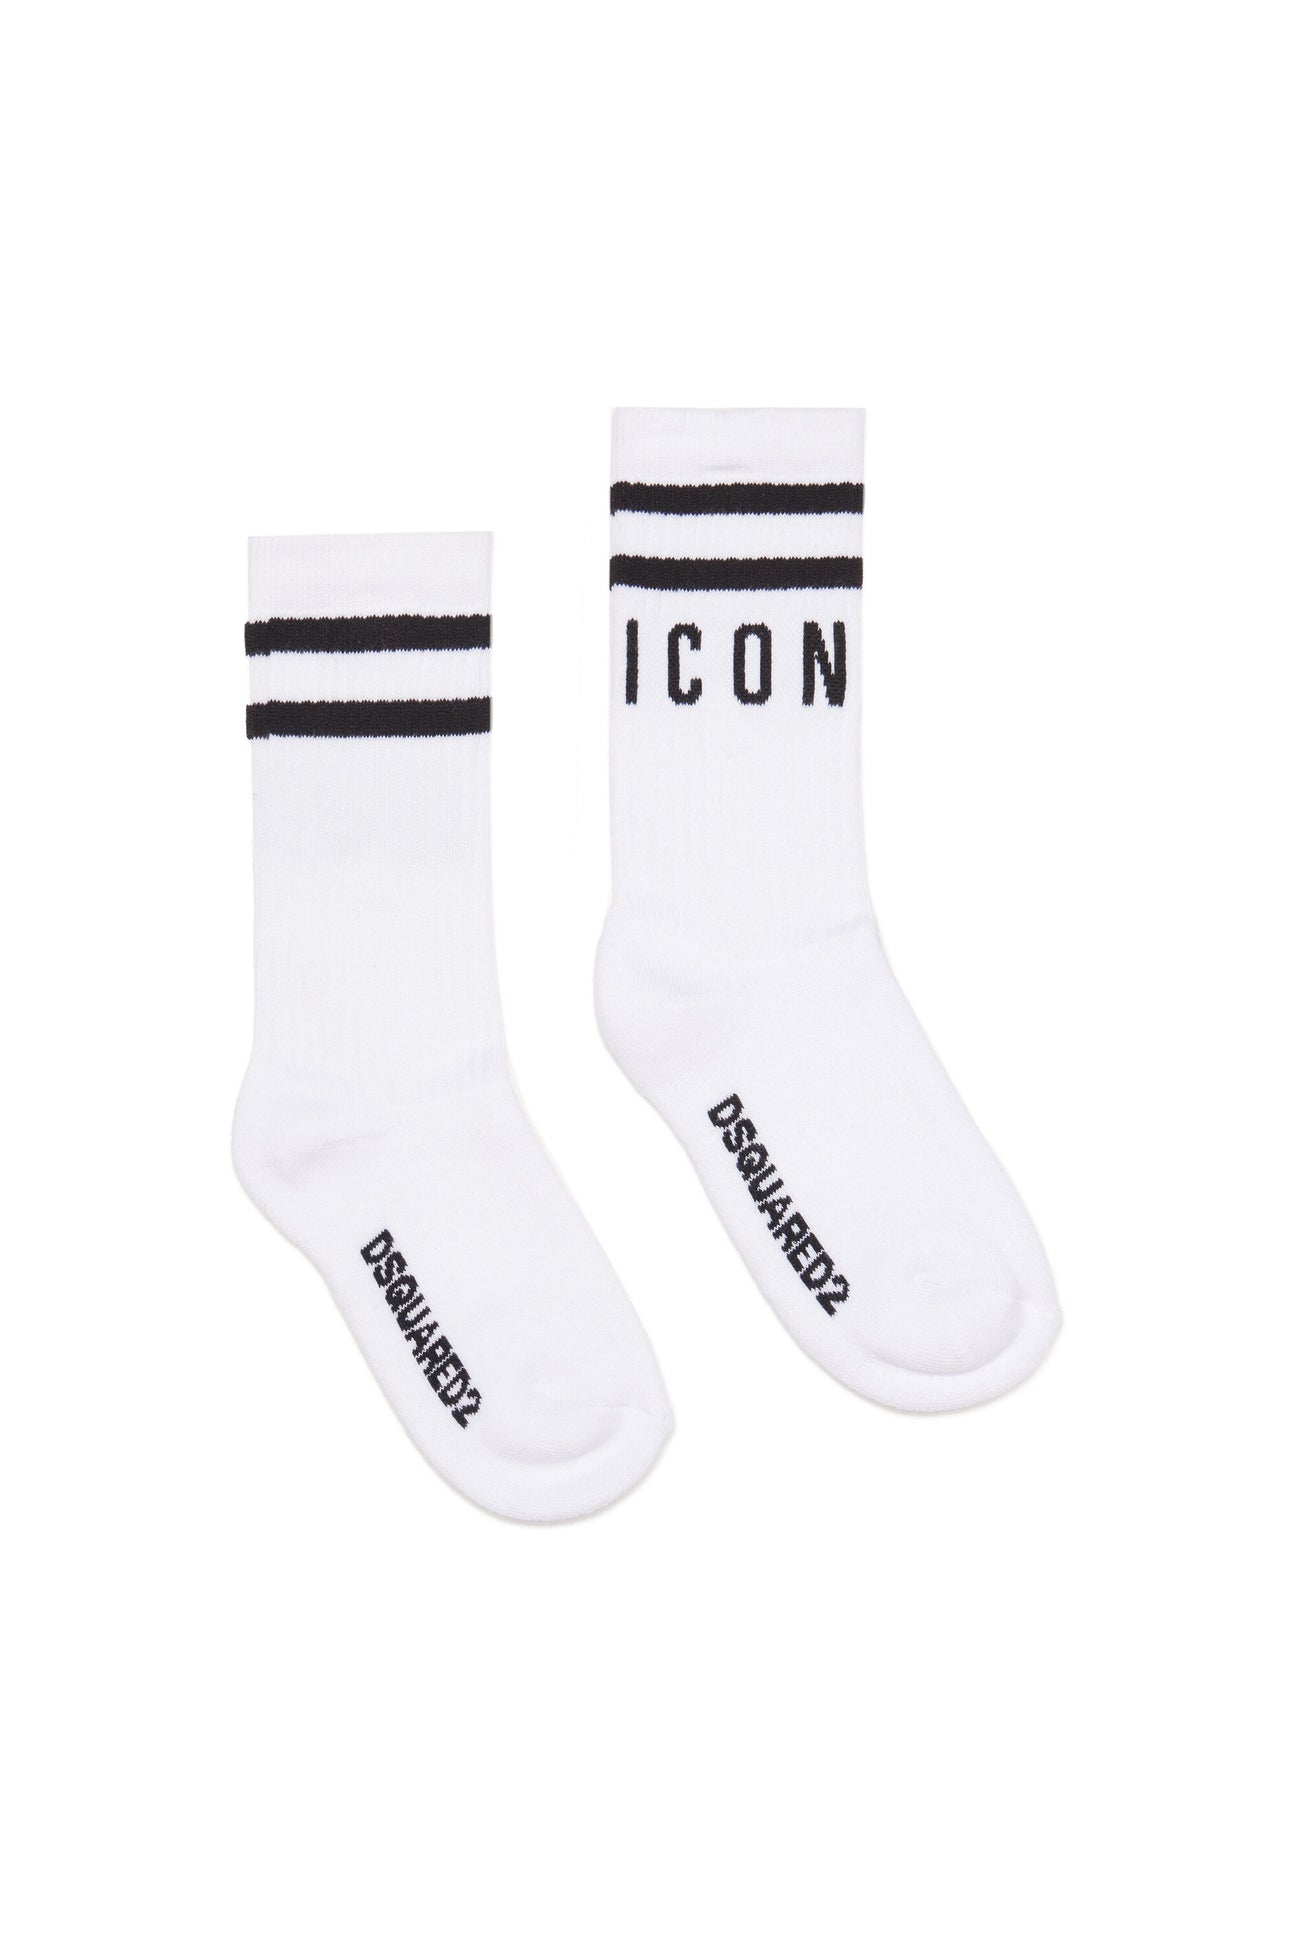 Socks with Icon logo 